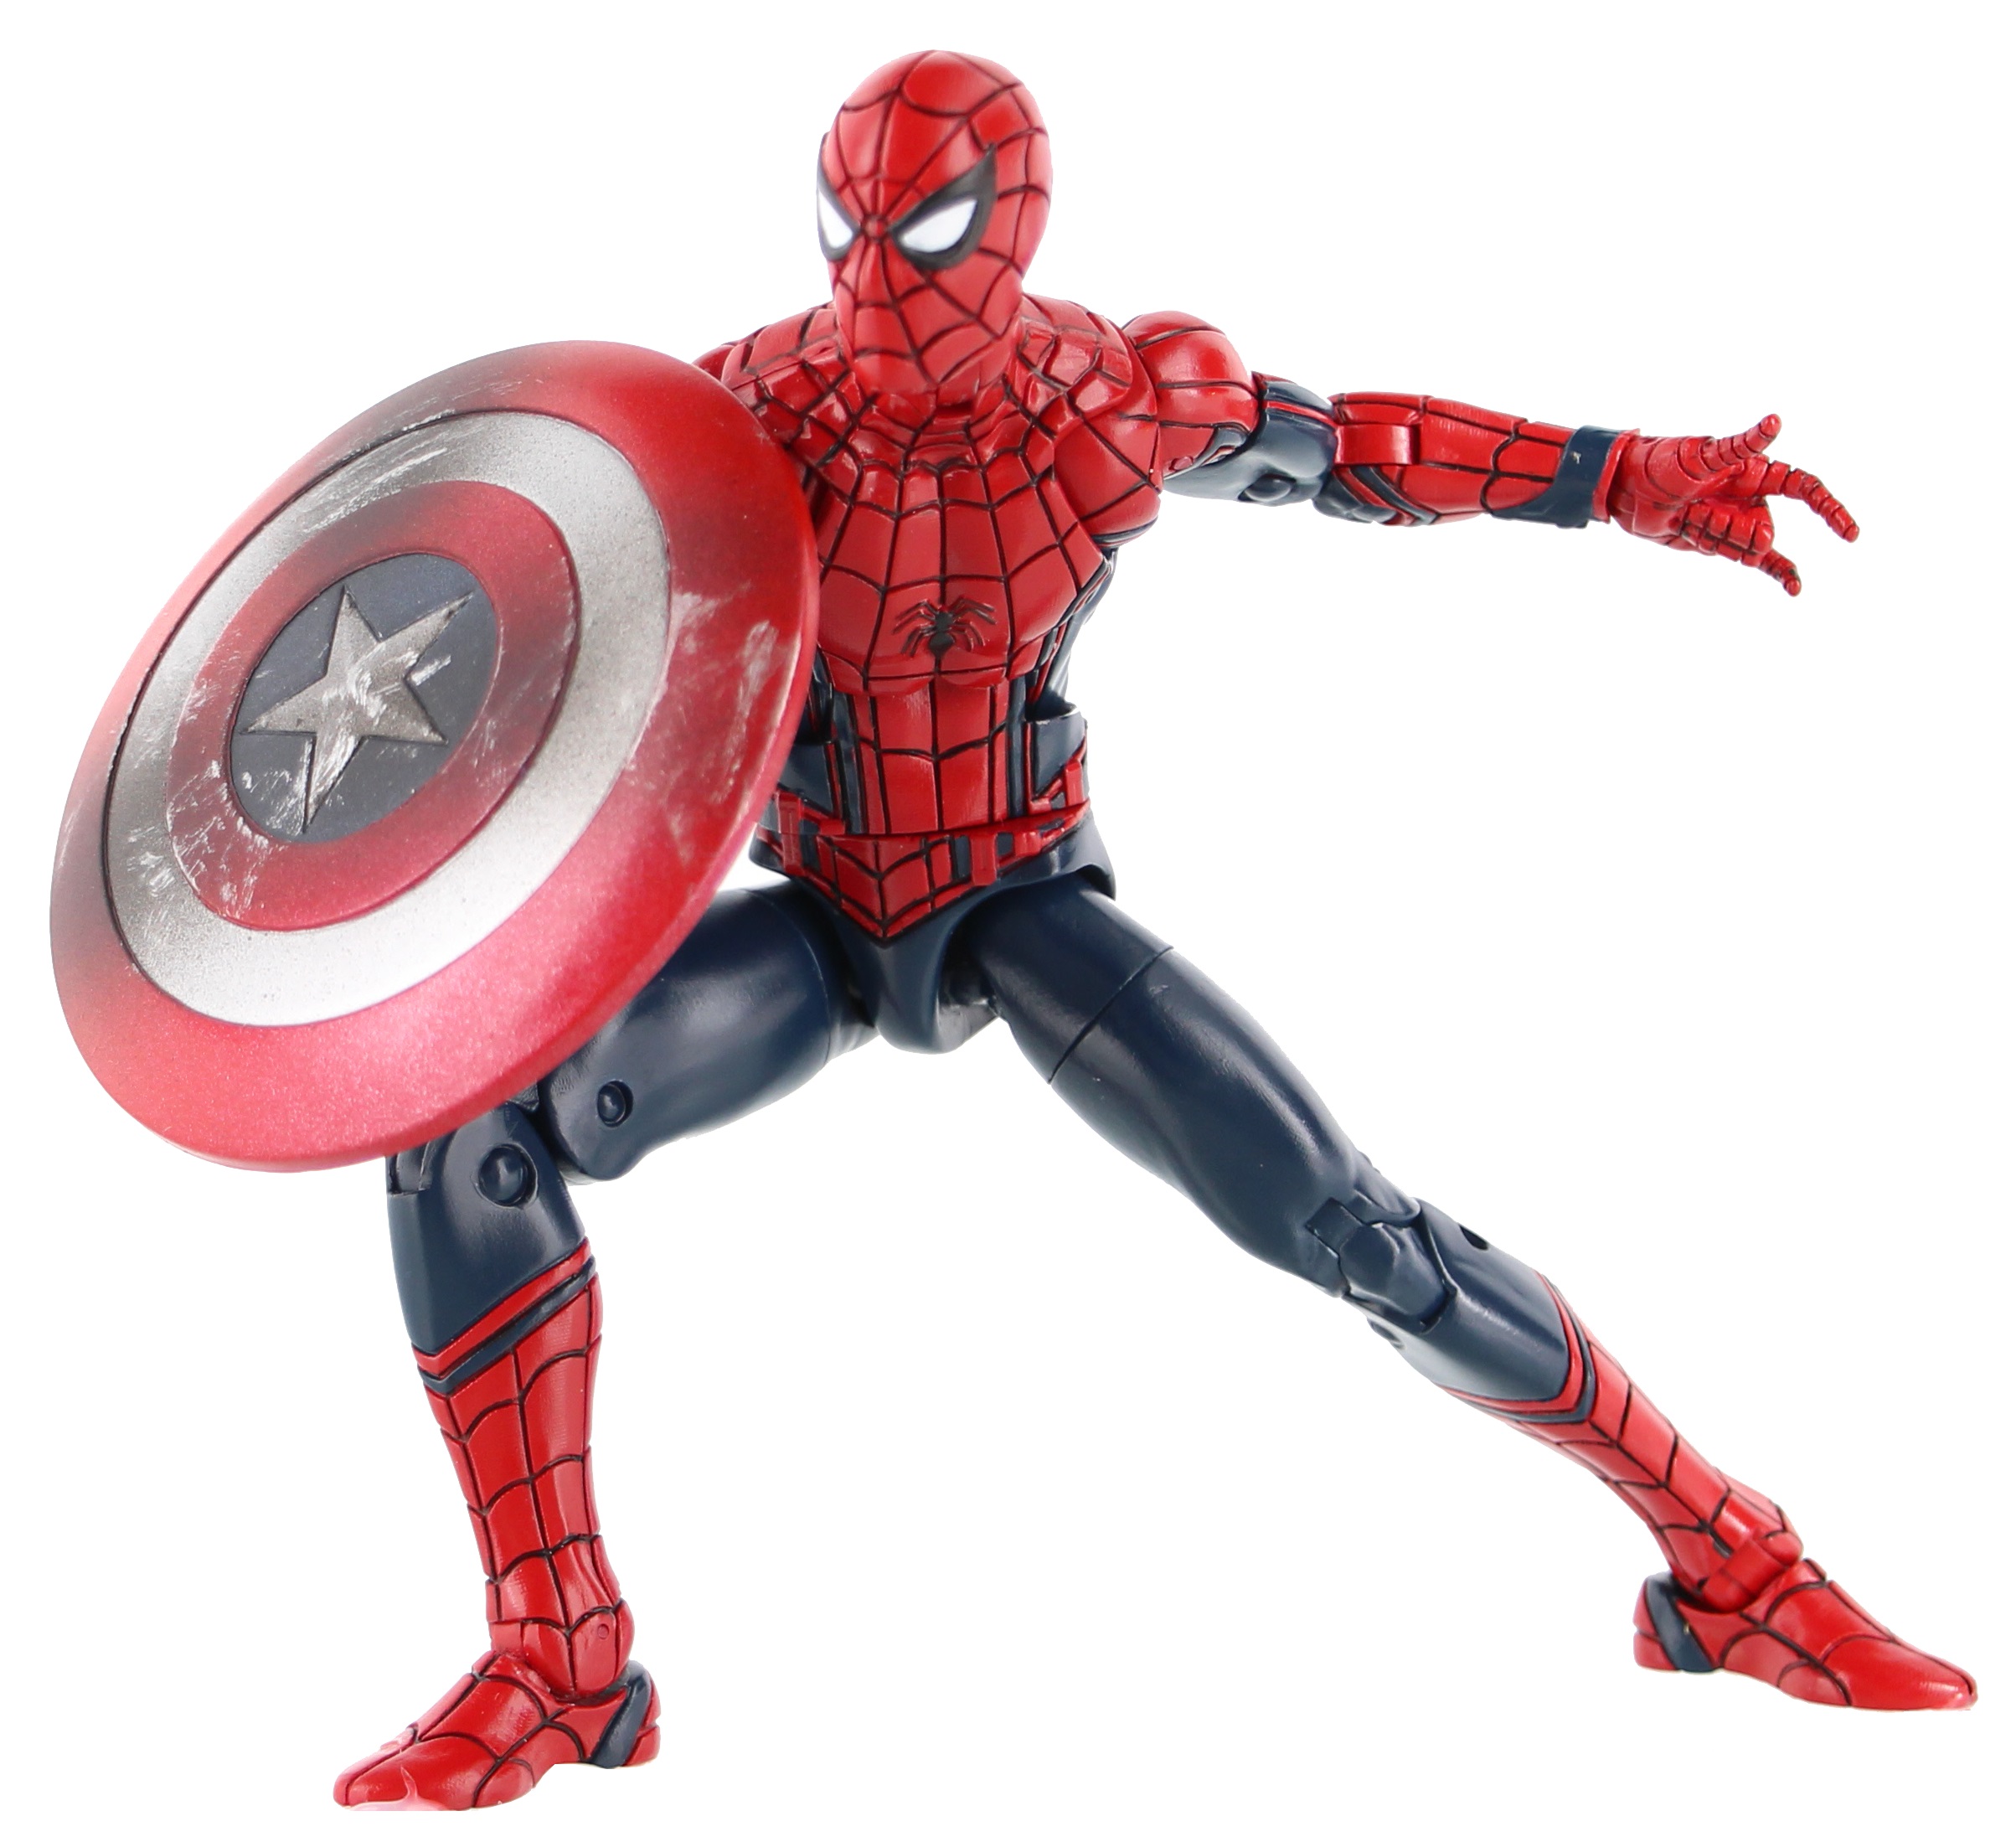 ckFiguresSpiderMan Captain America: Civil War Spider-Man Marvel Legends Figure Officially Revealed